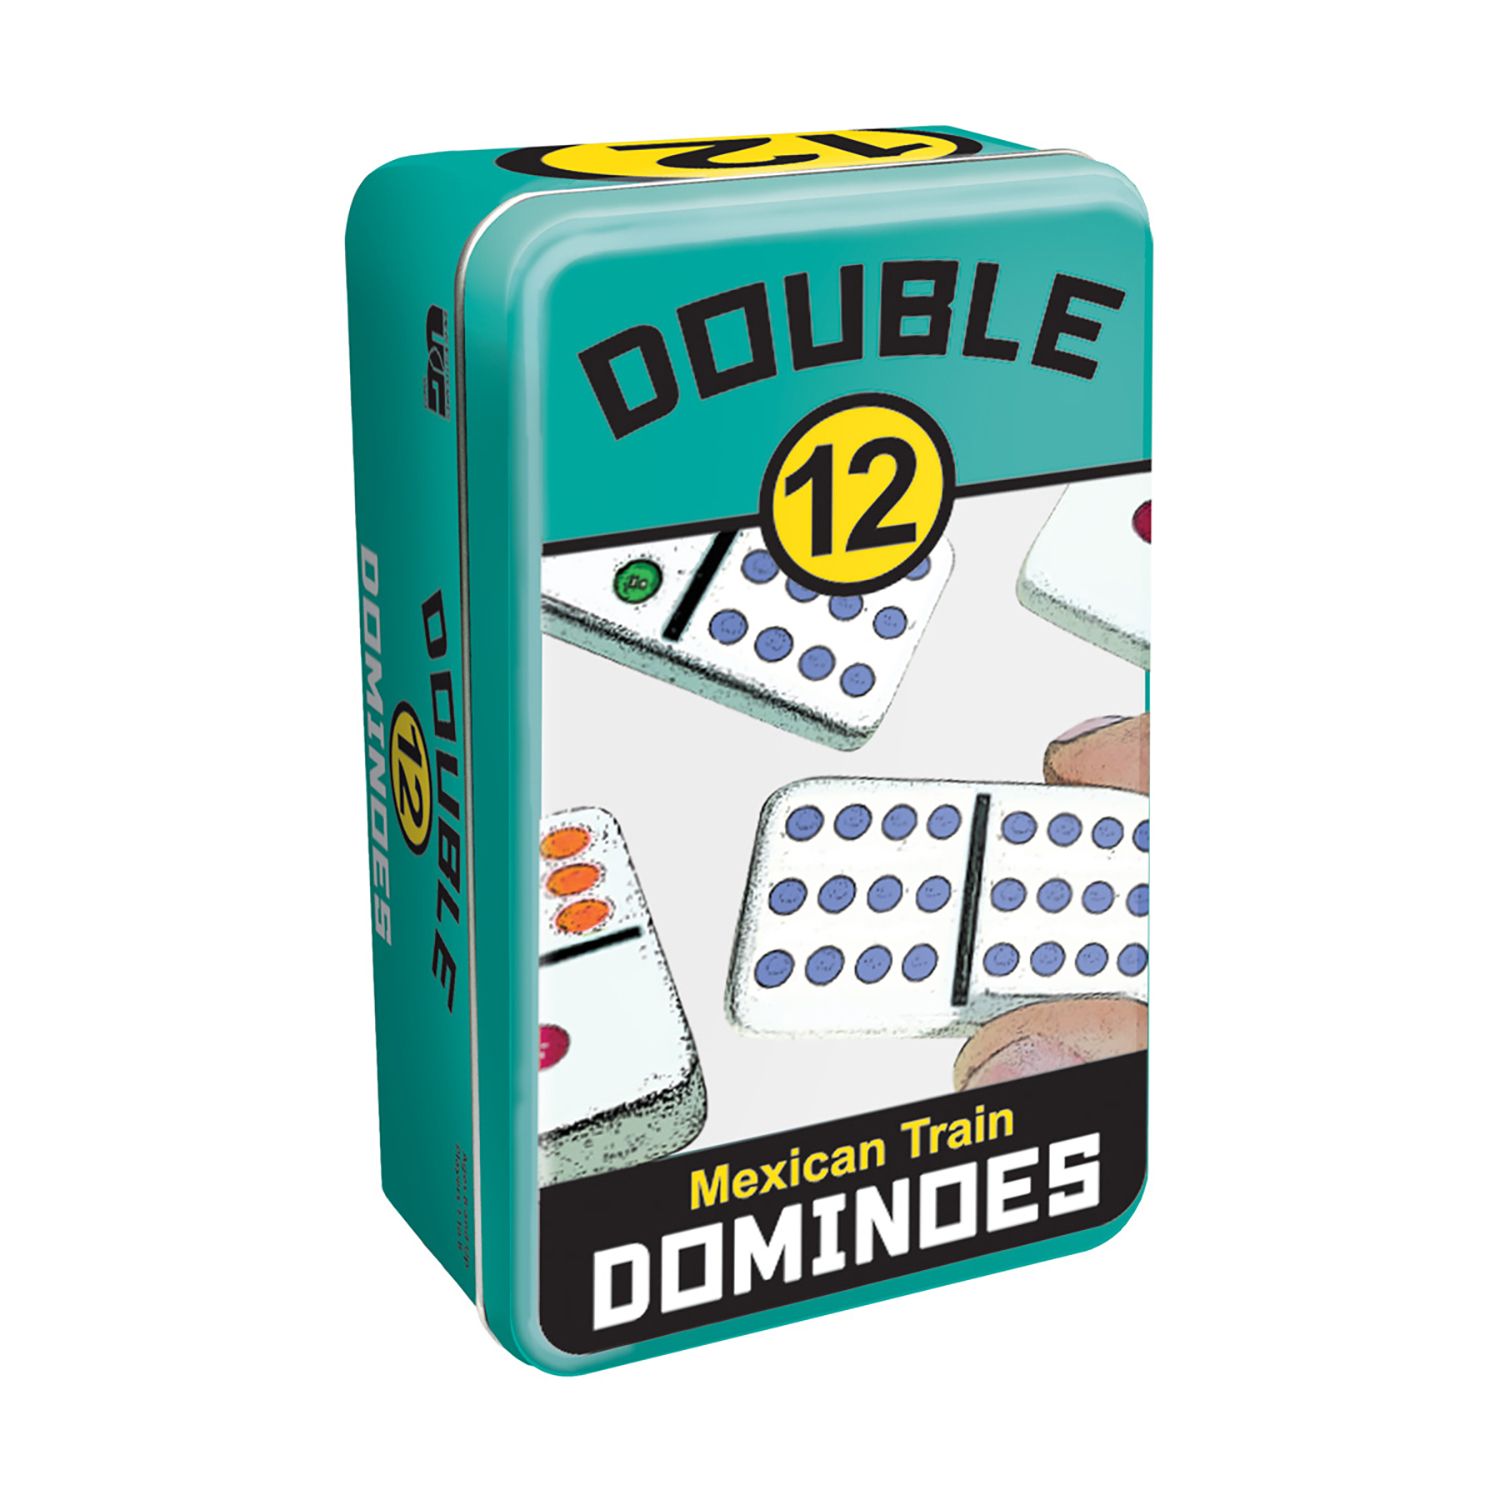 Domino Double 12 Train Mexicain kopen op